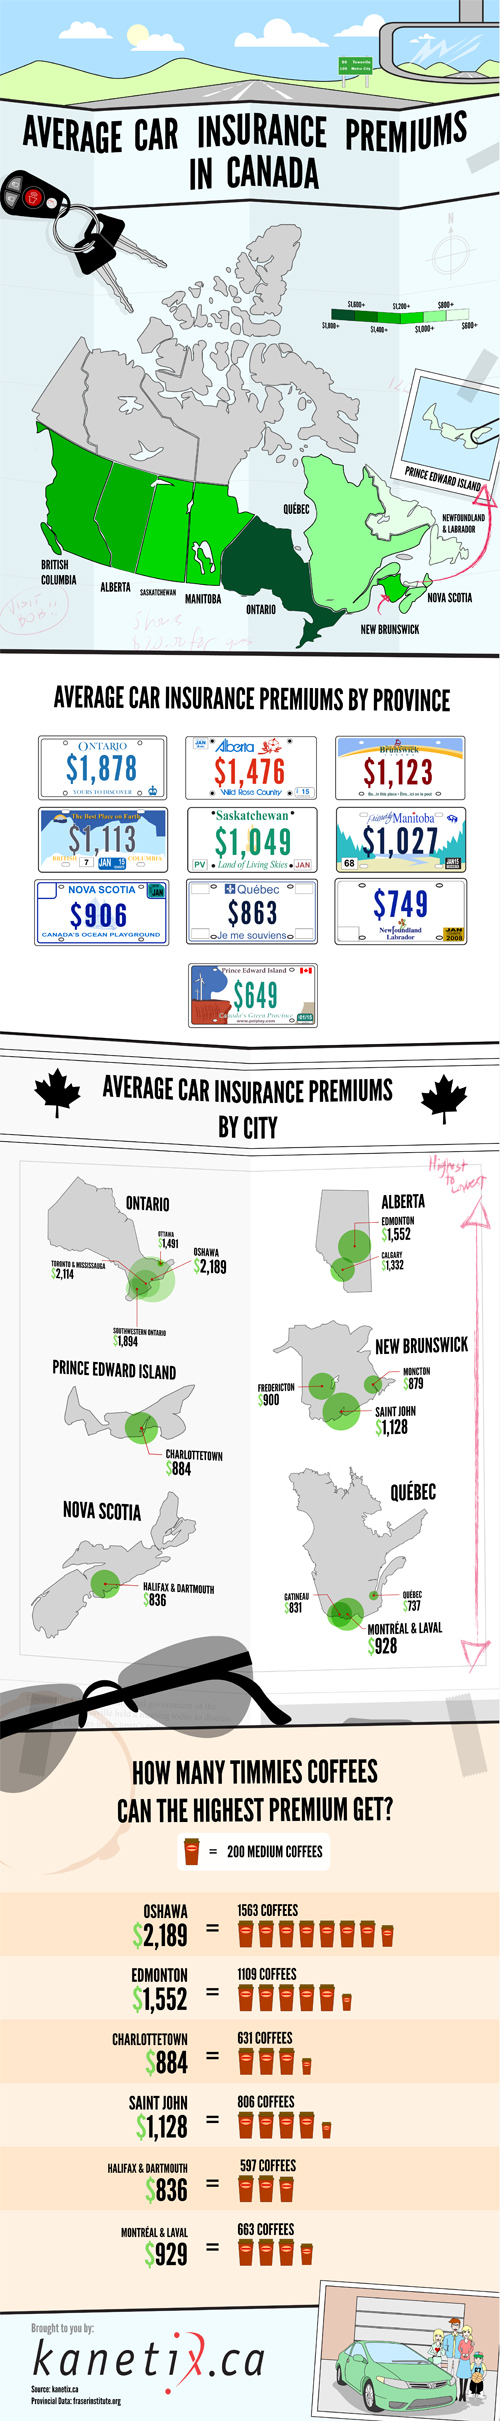 Canadian Car Insurance Premiums 